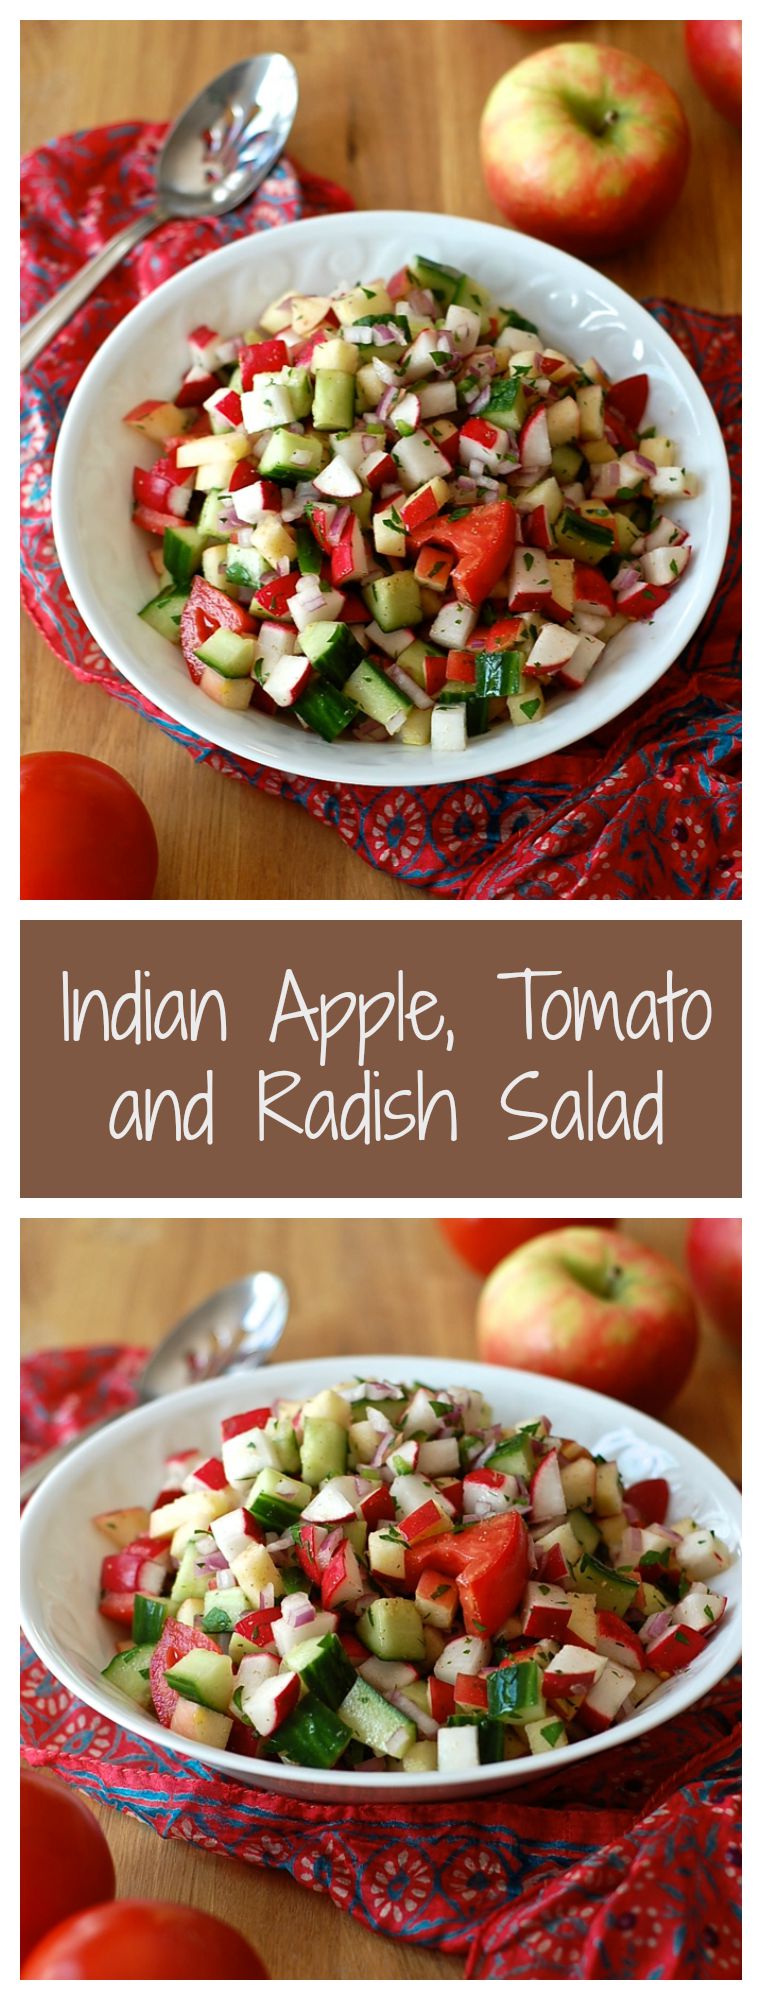 Indian Apple, Tomato and Radish Salad